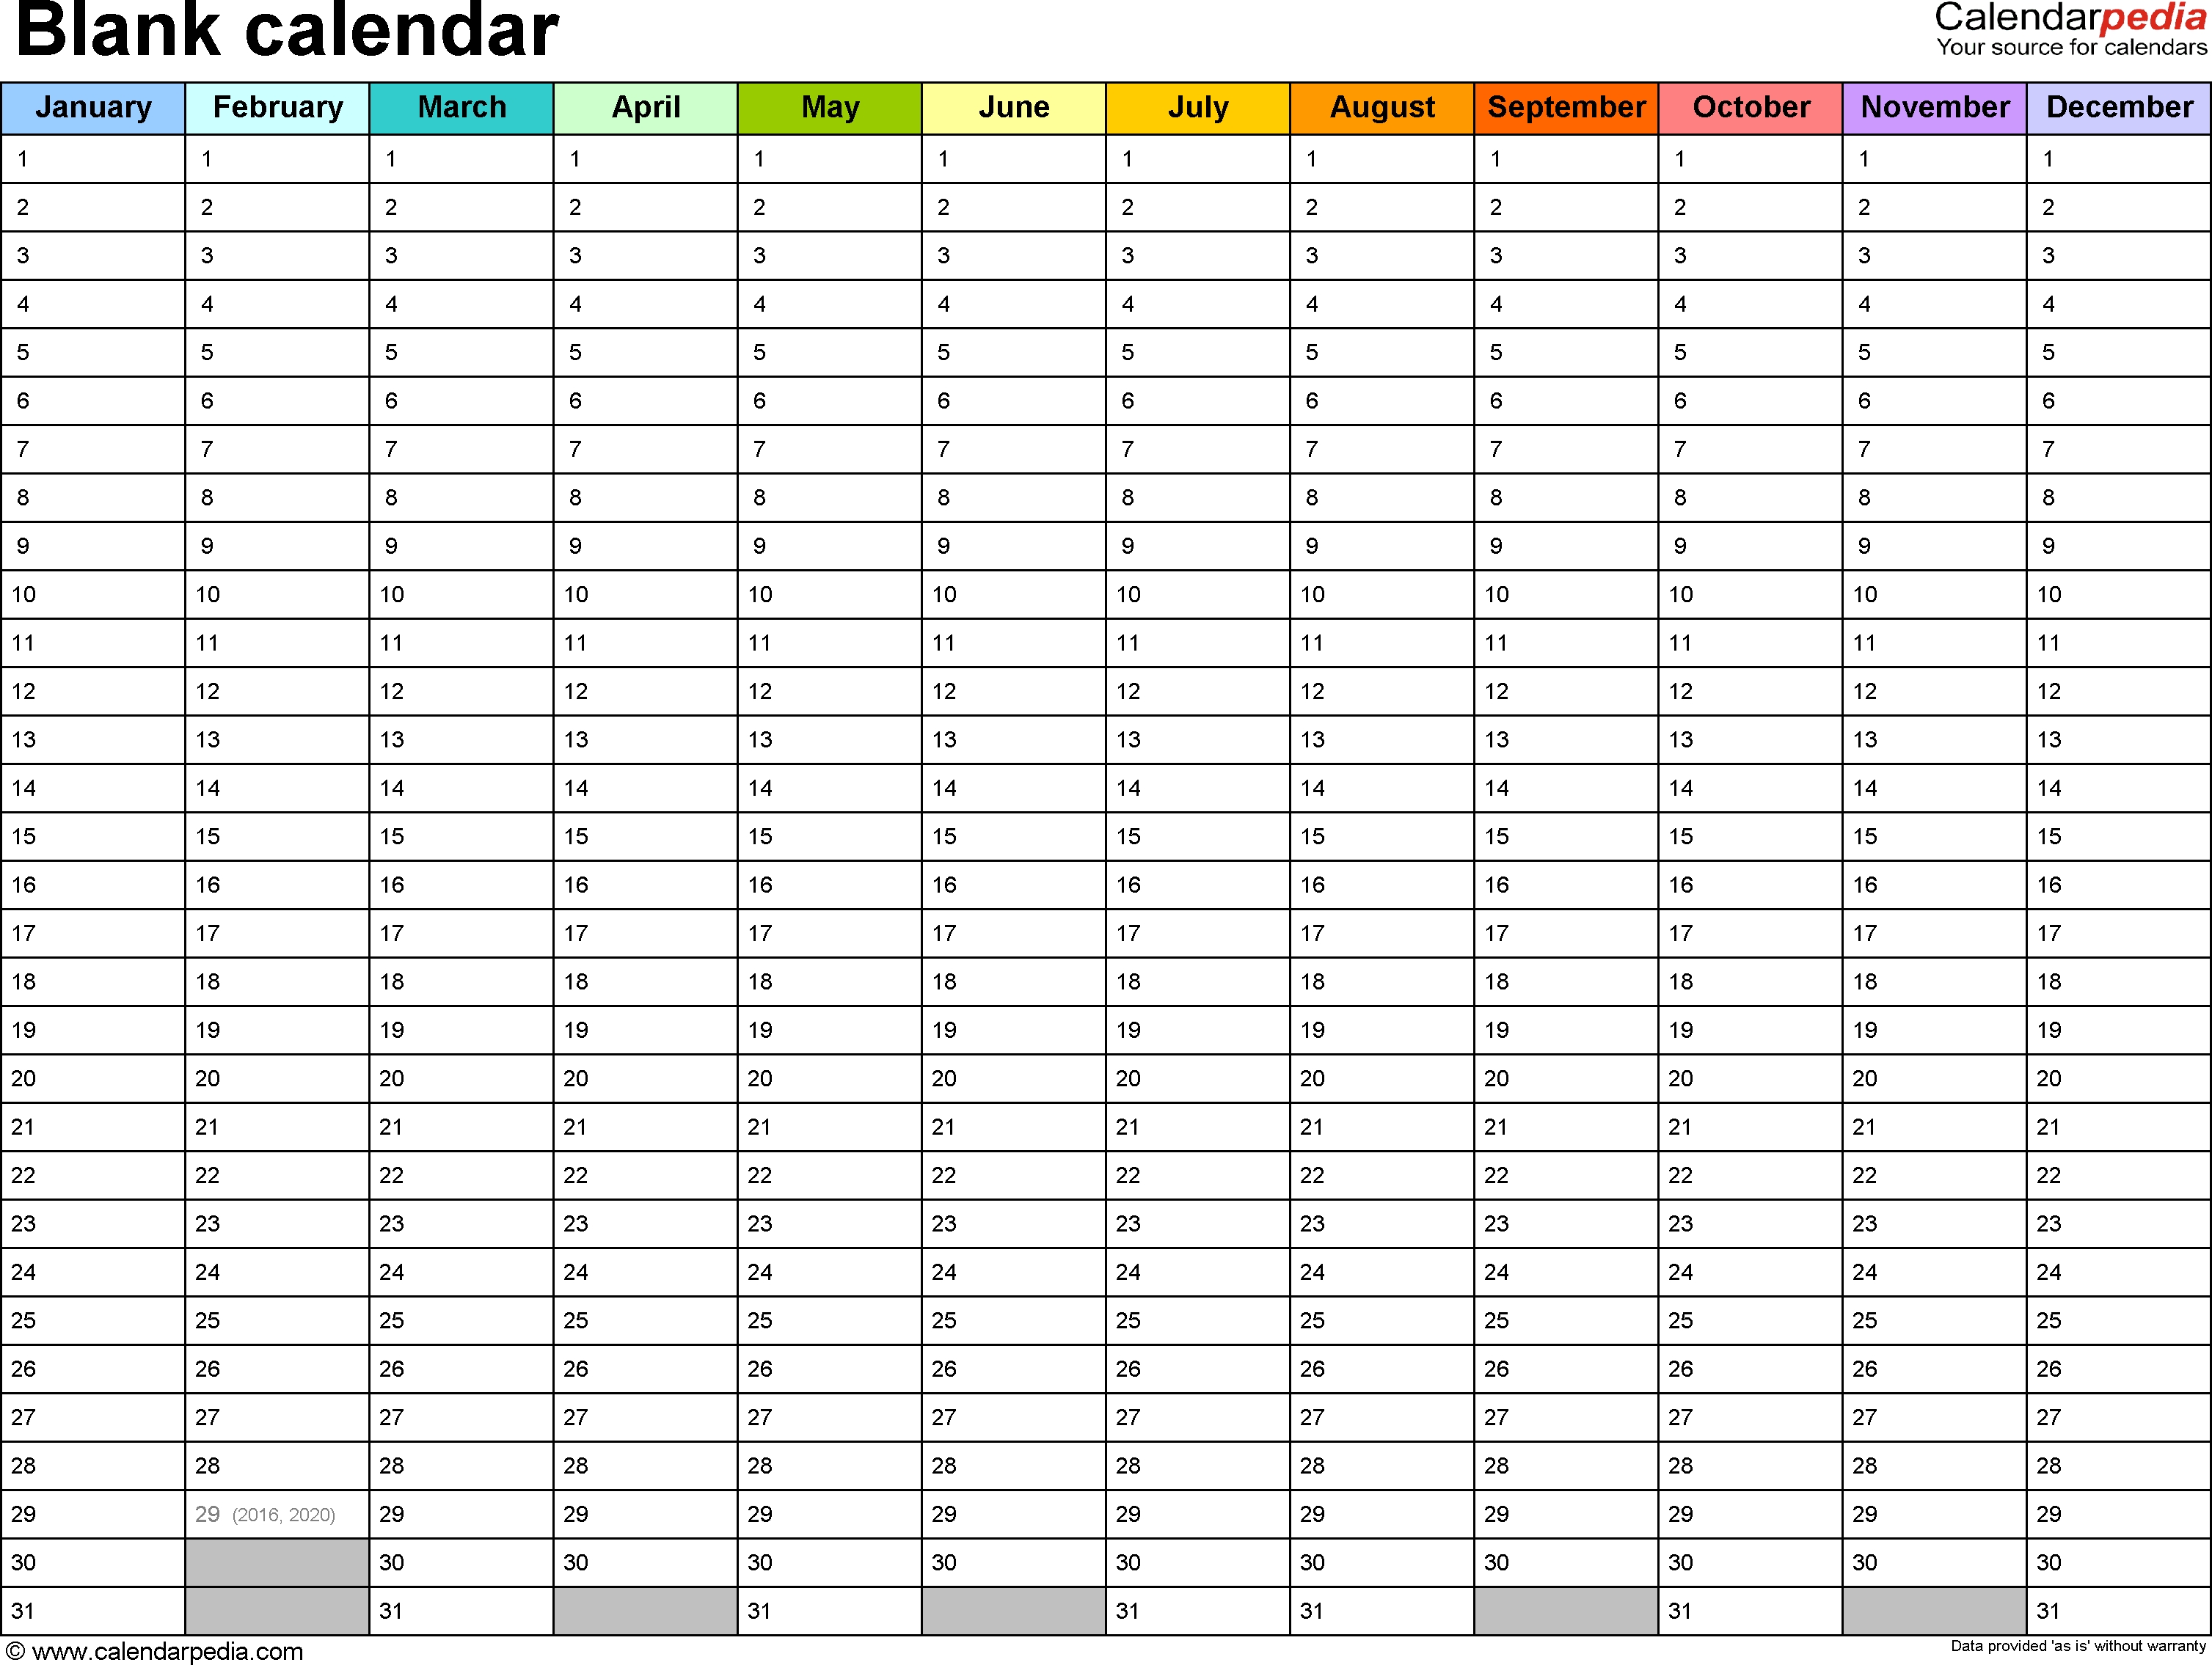 Blank Calendar - 9 Free Printable Microsoft Word Templates intended for 12 Month Calendar Template Printable